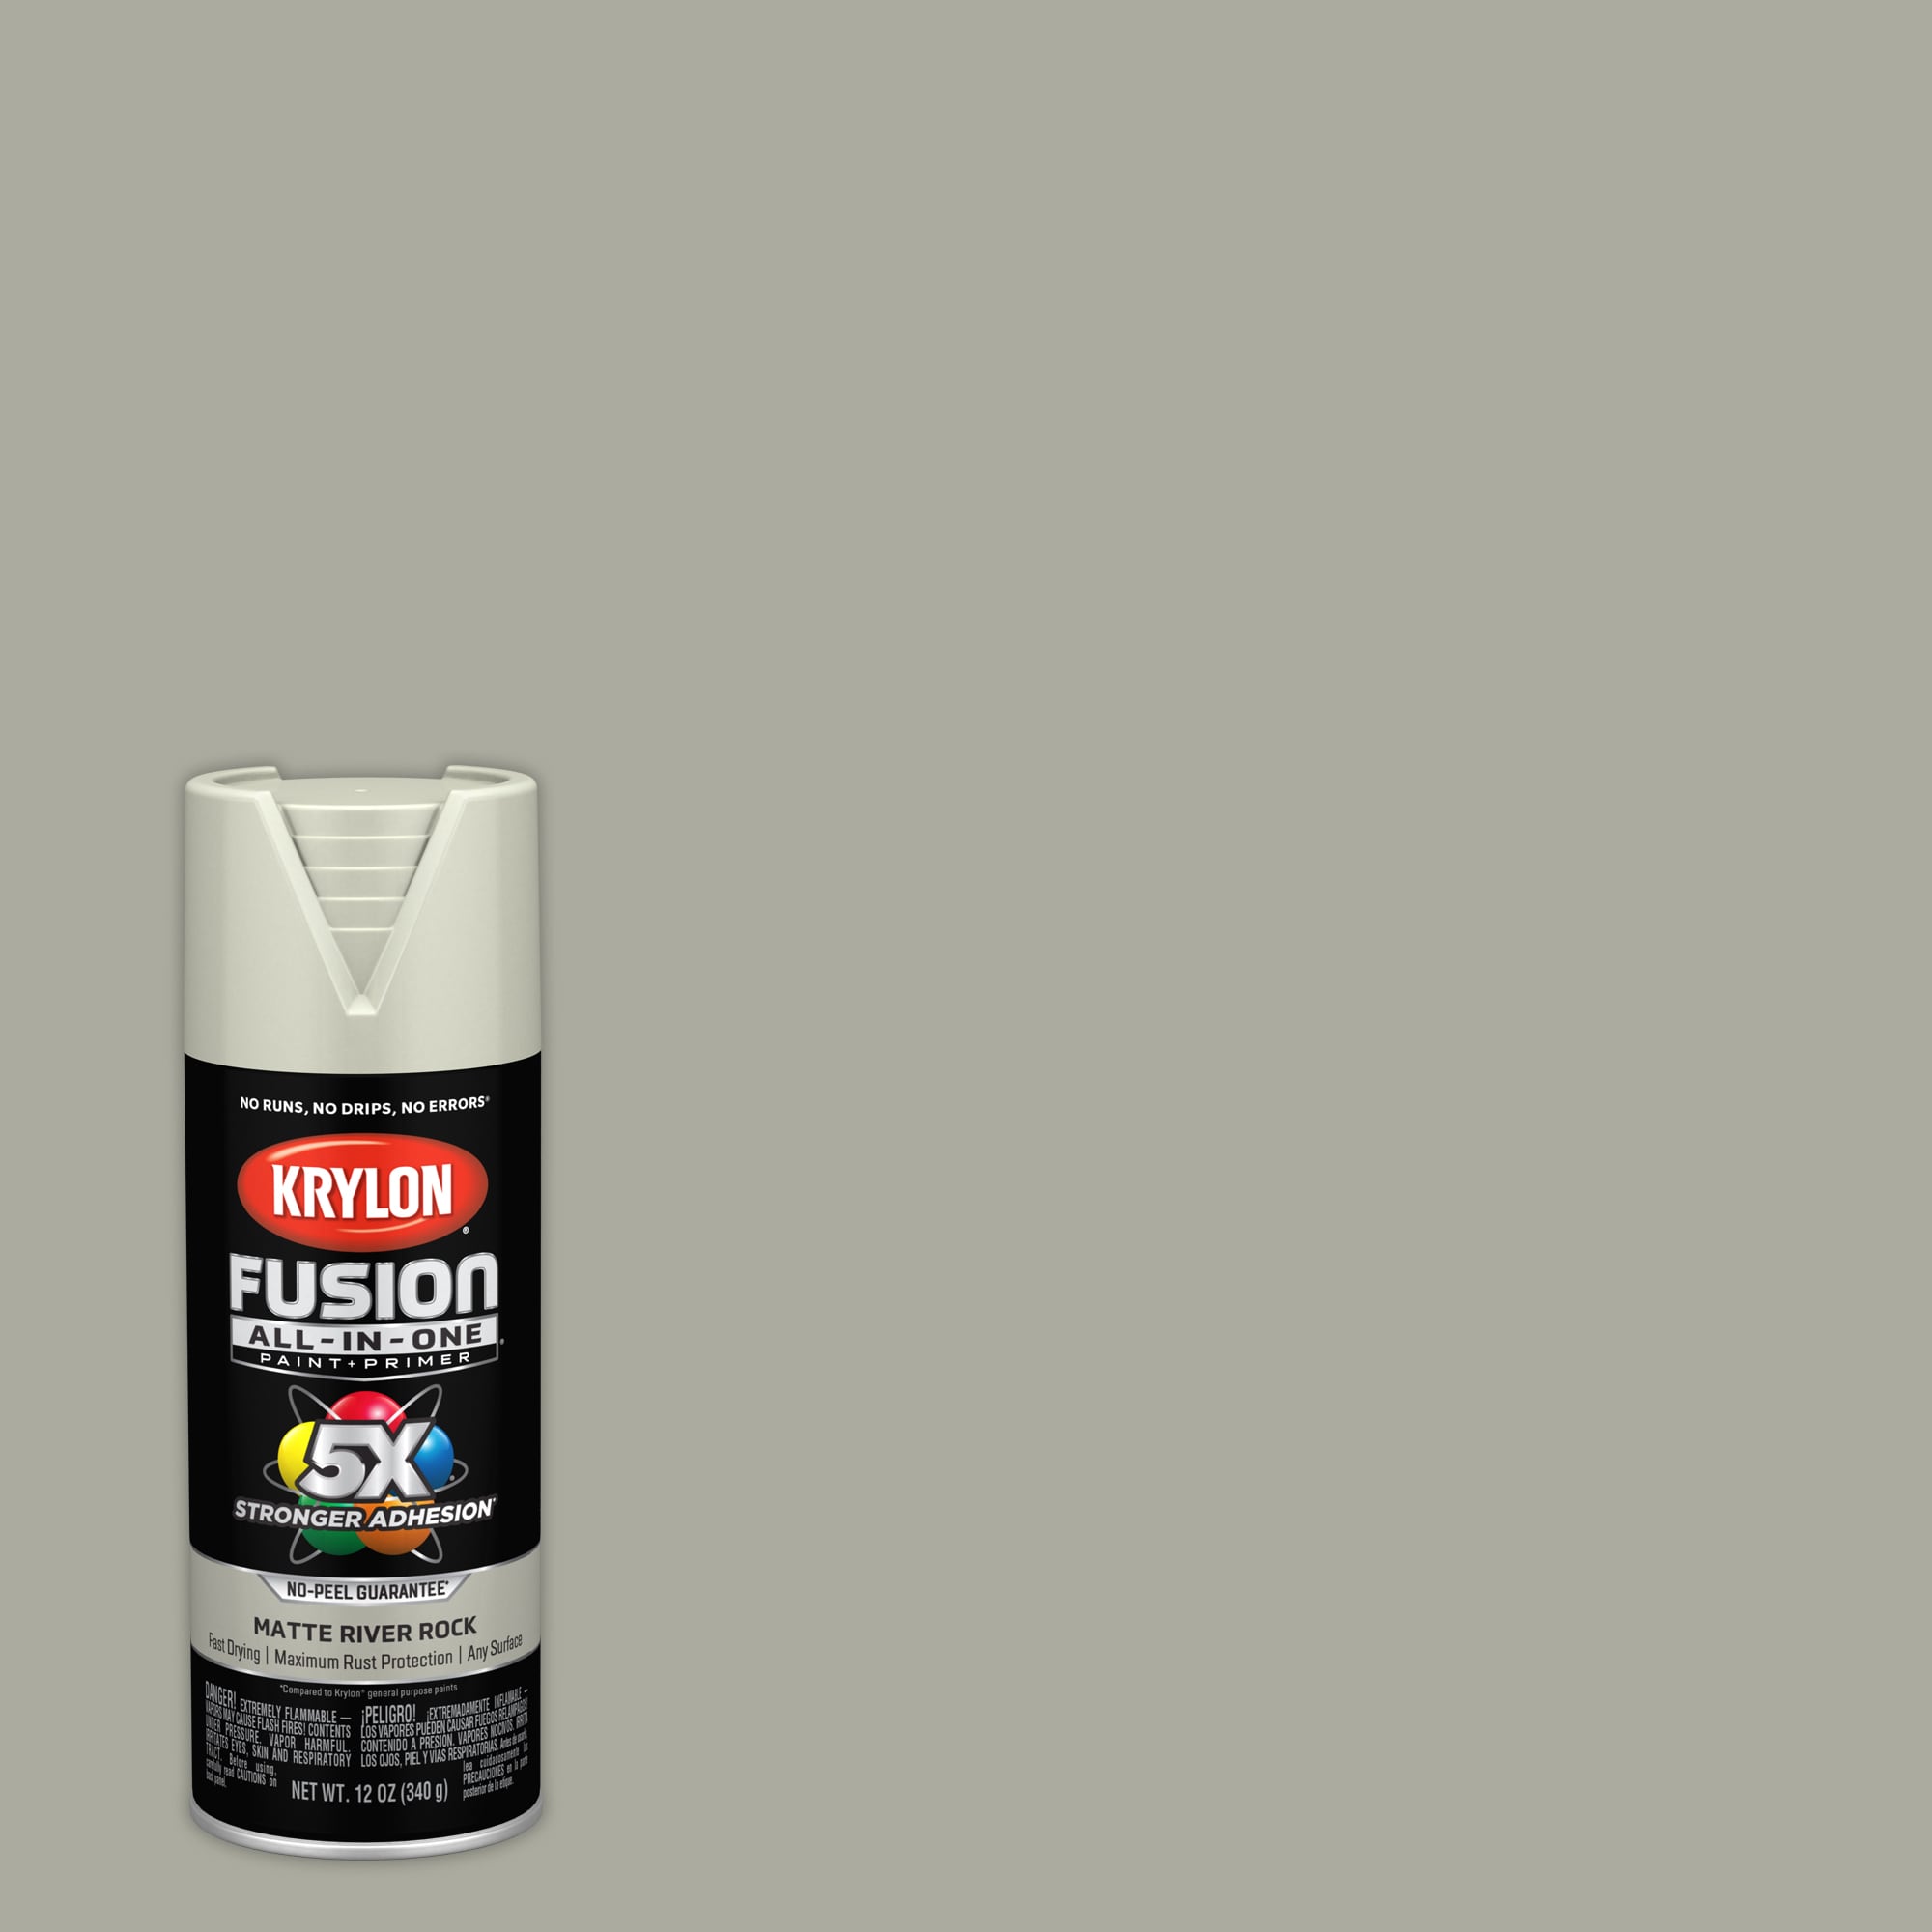 Krylon Fusion All-In-One Matte Black Spray Paint - 12 oz